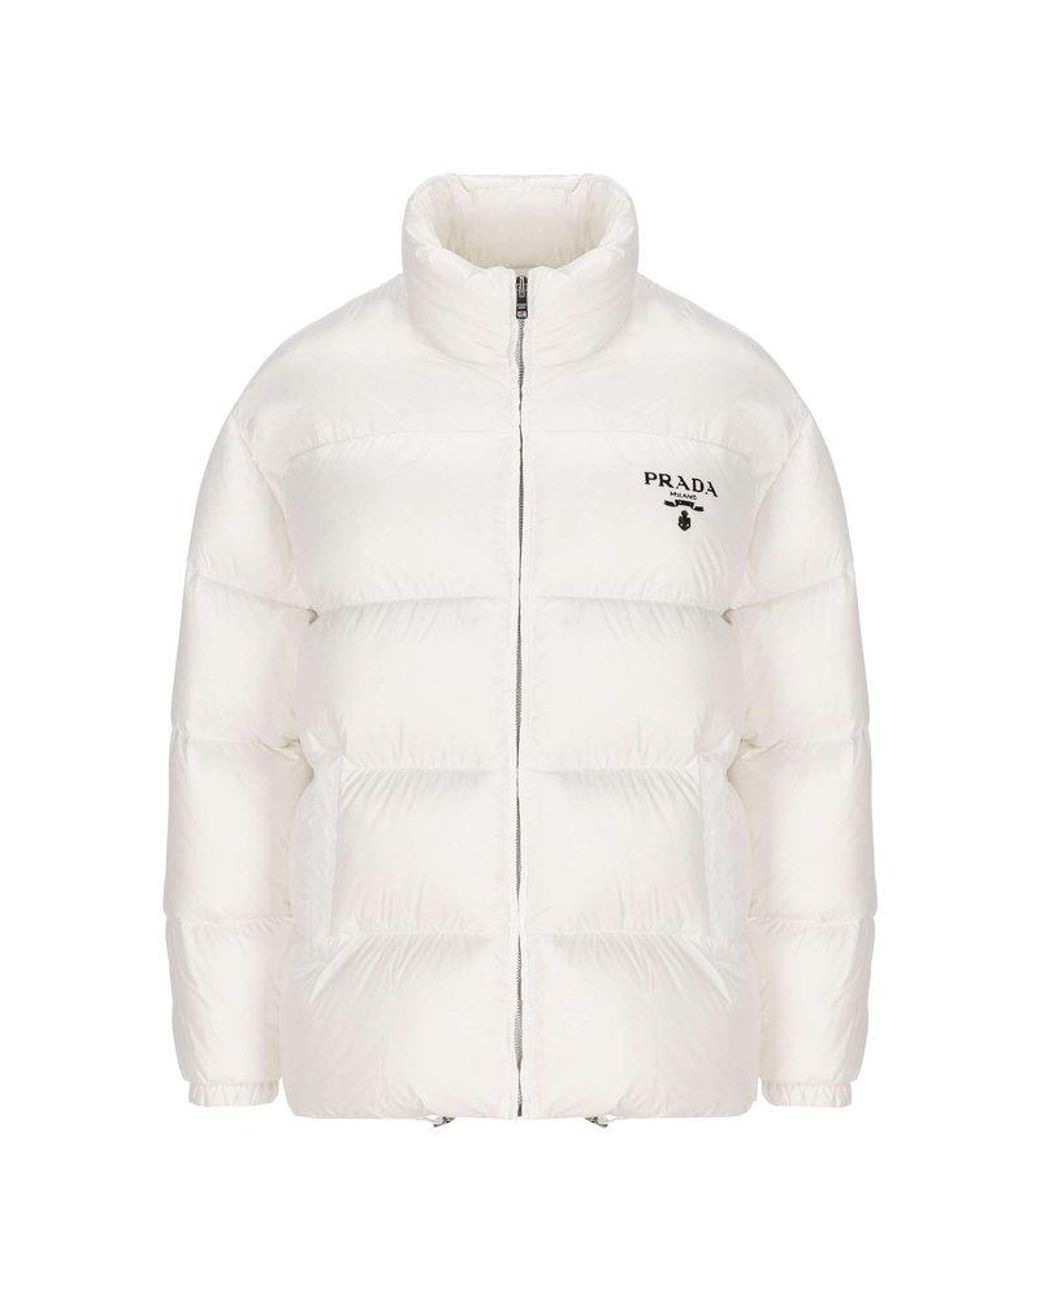 Prada Logo Printed Puffer Jacket in White | Lyst